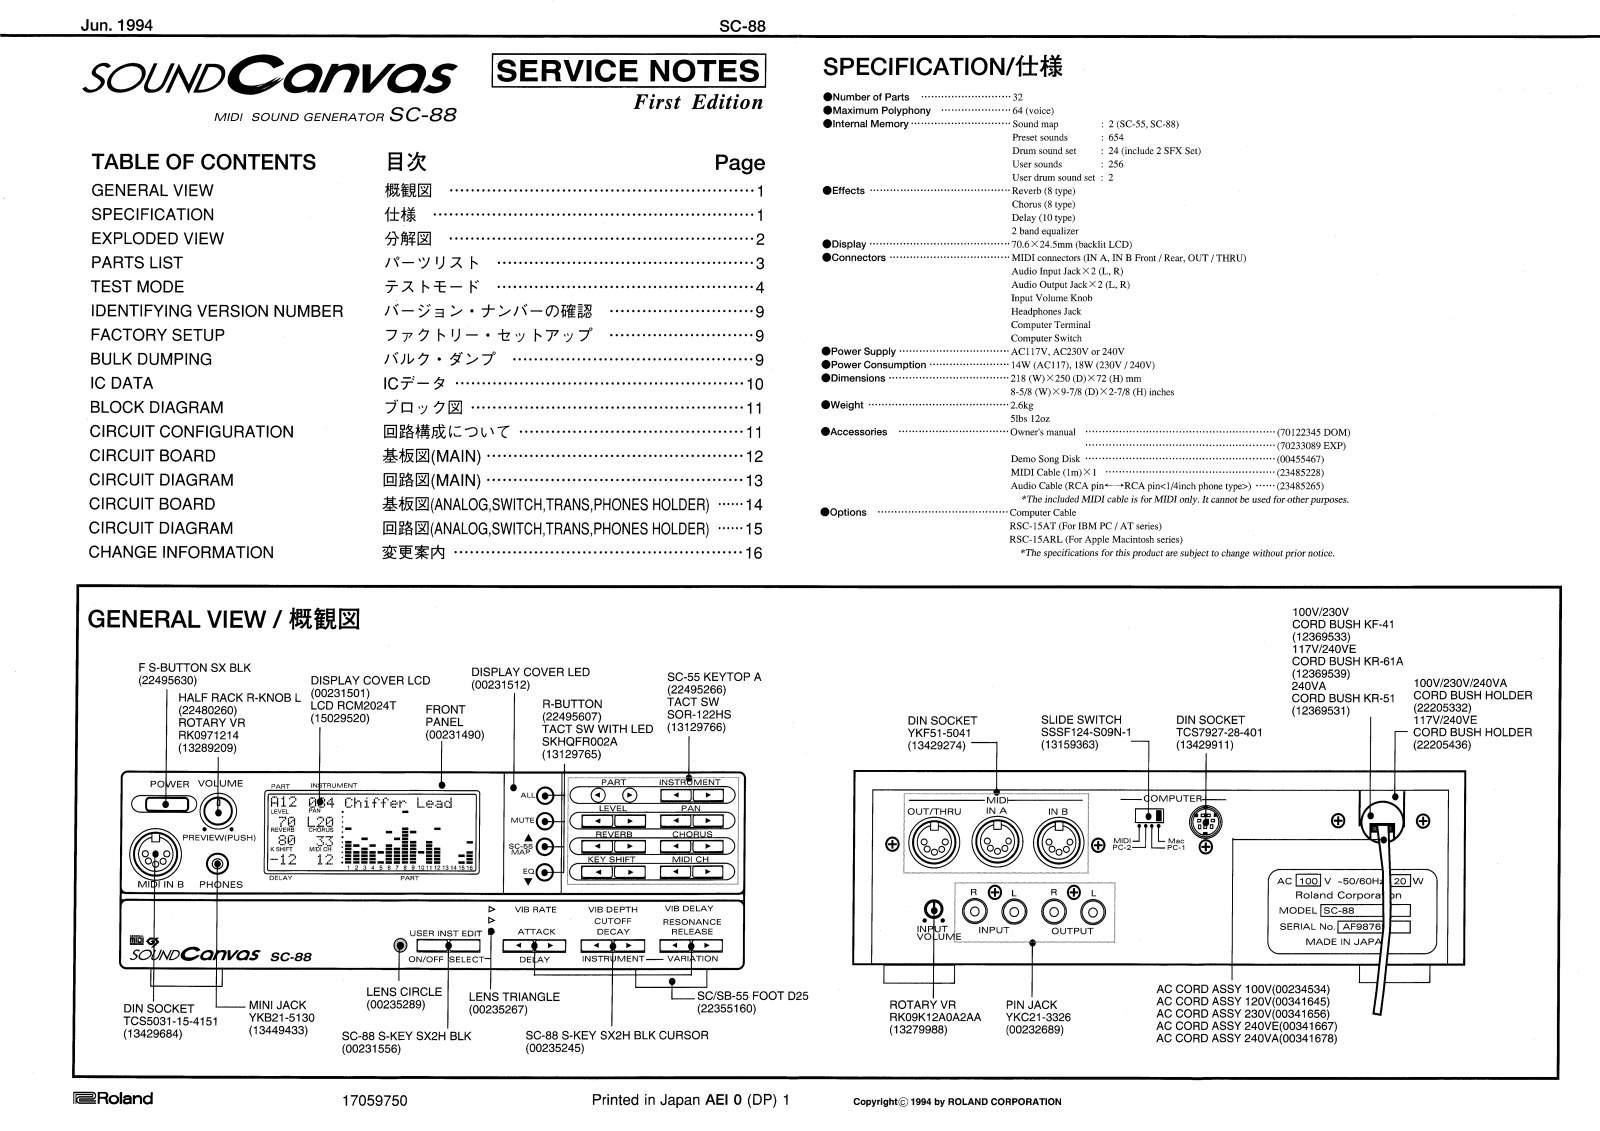 Roland SC-88 Service Notes